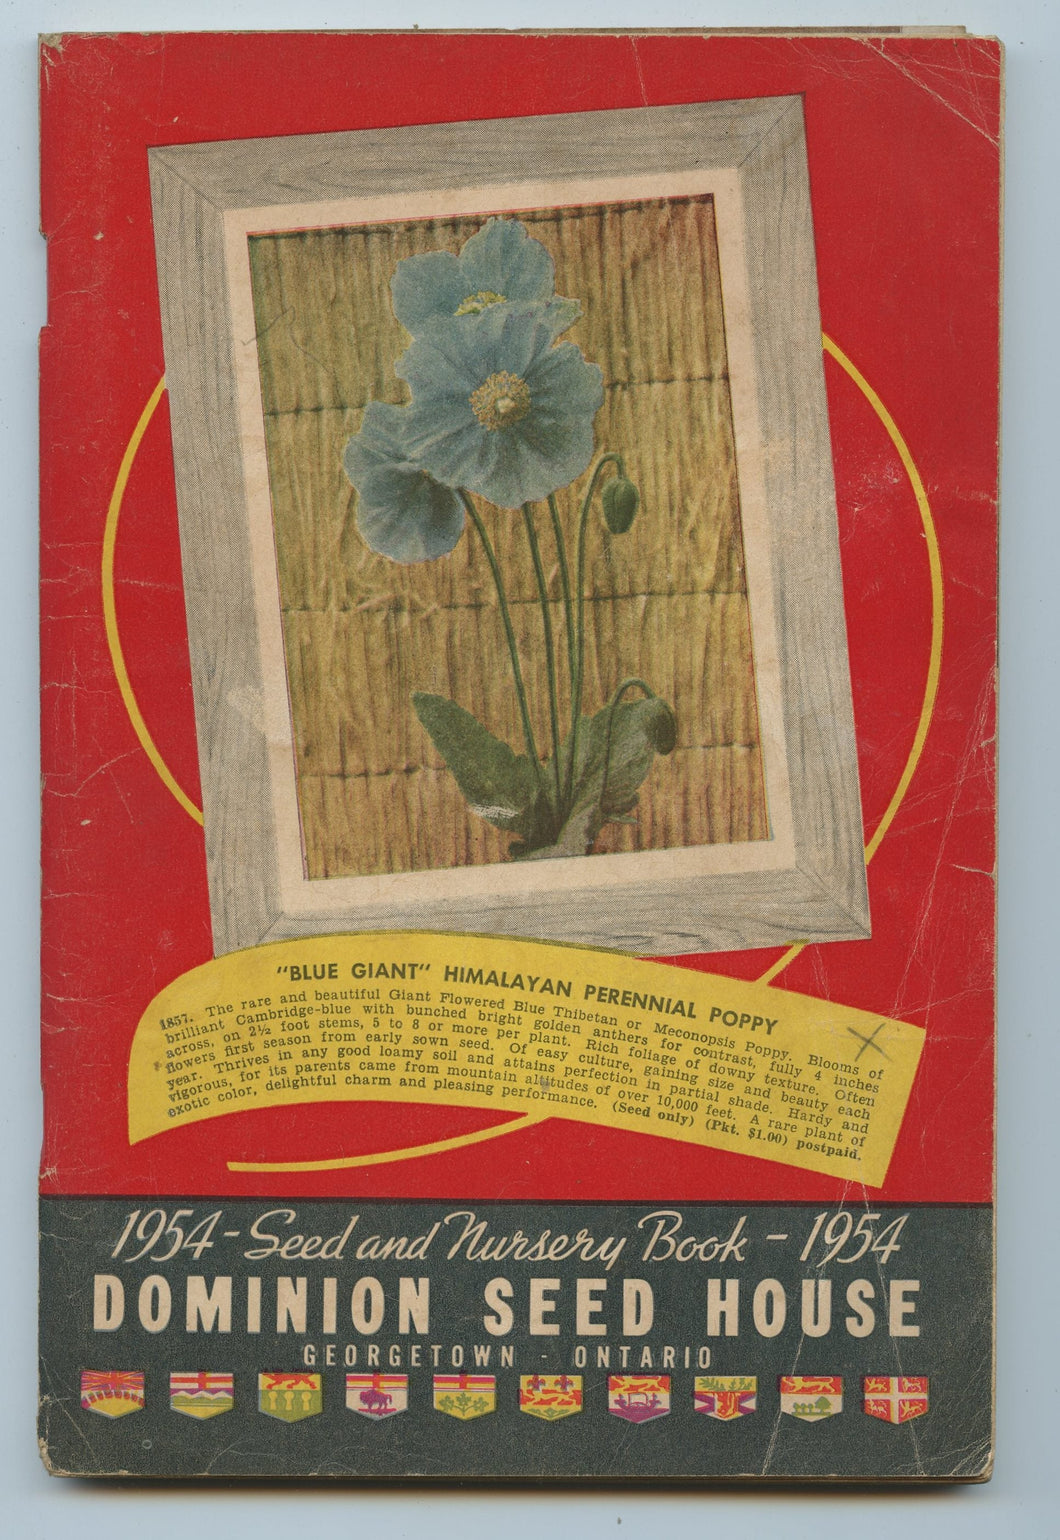 Dominion Seed House 1957 Seed and Nursery Book